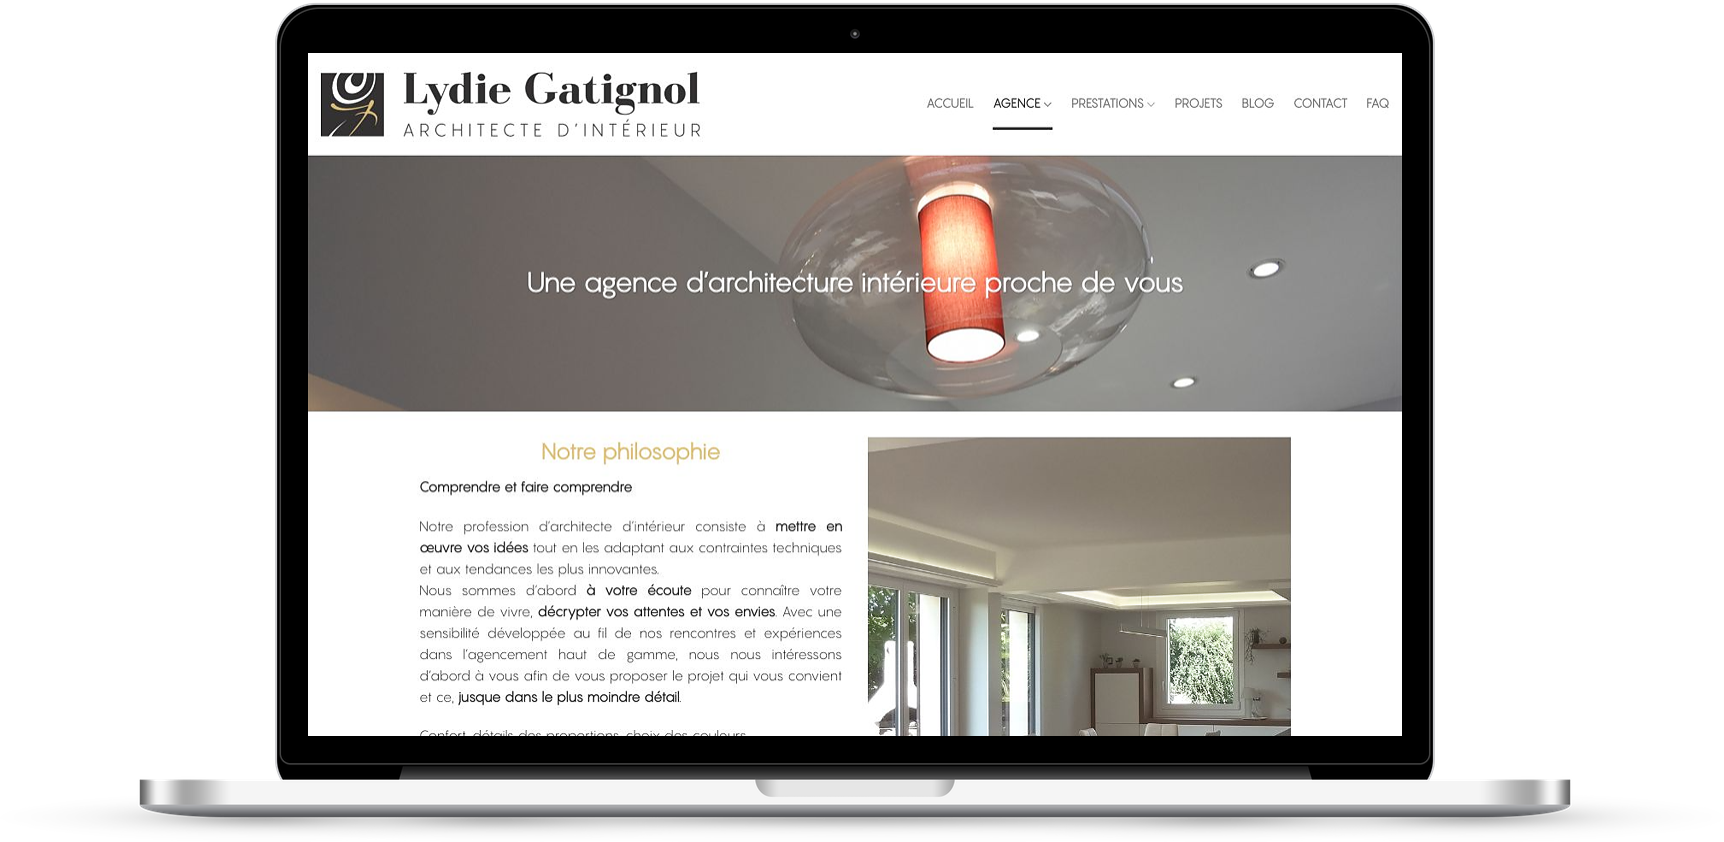 refonte-site-web-lydie-gatignol-interface-contenu